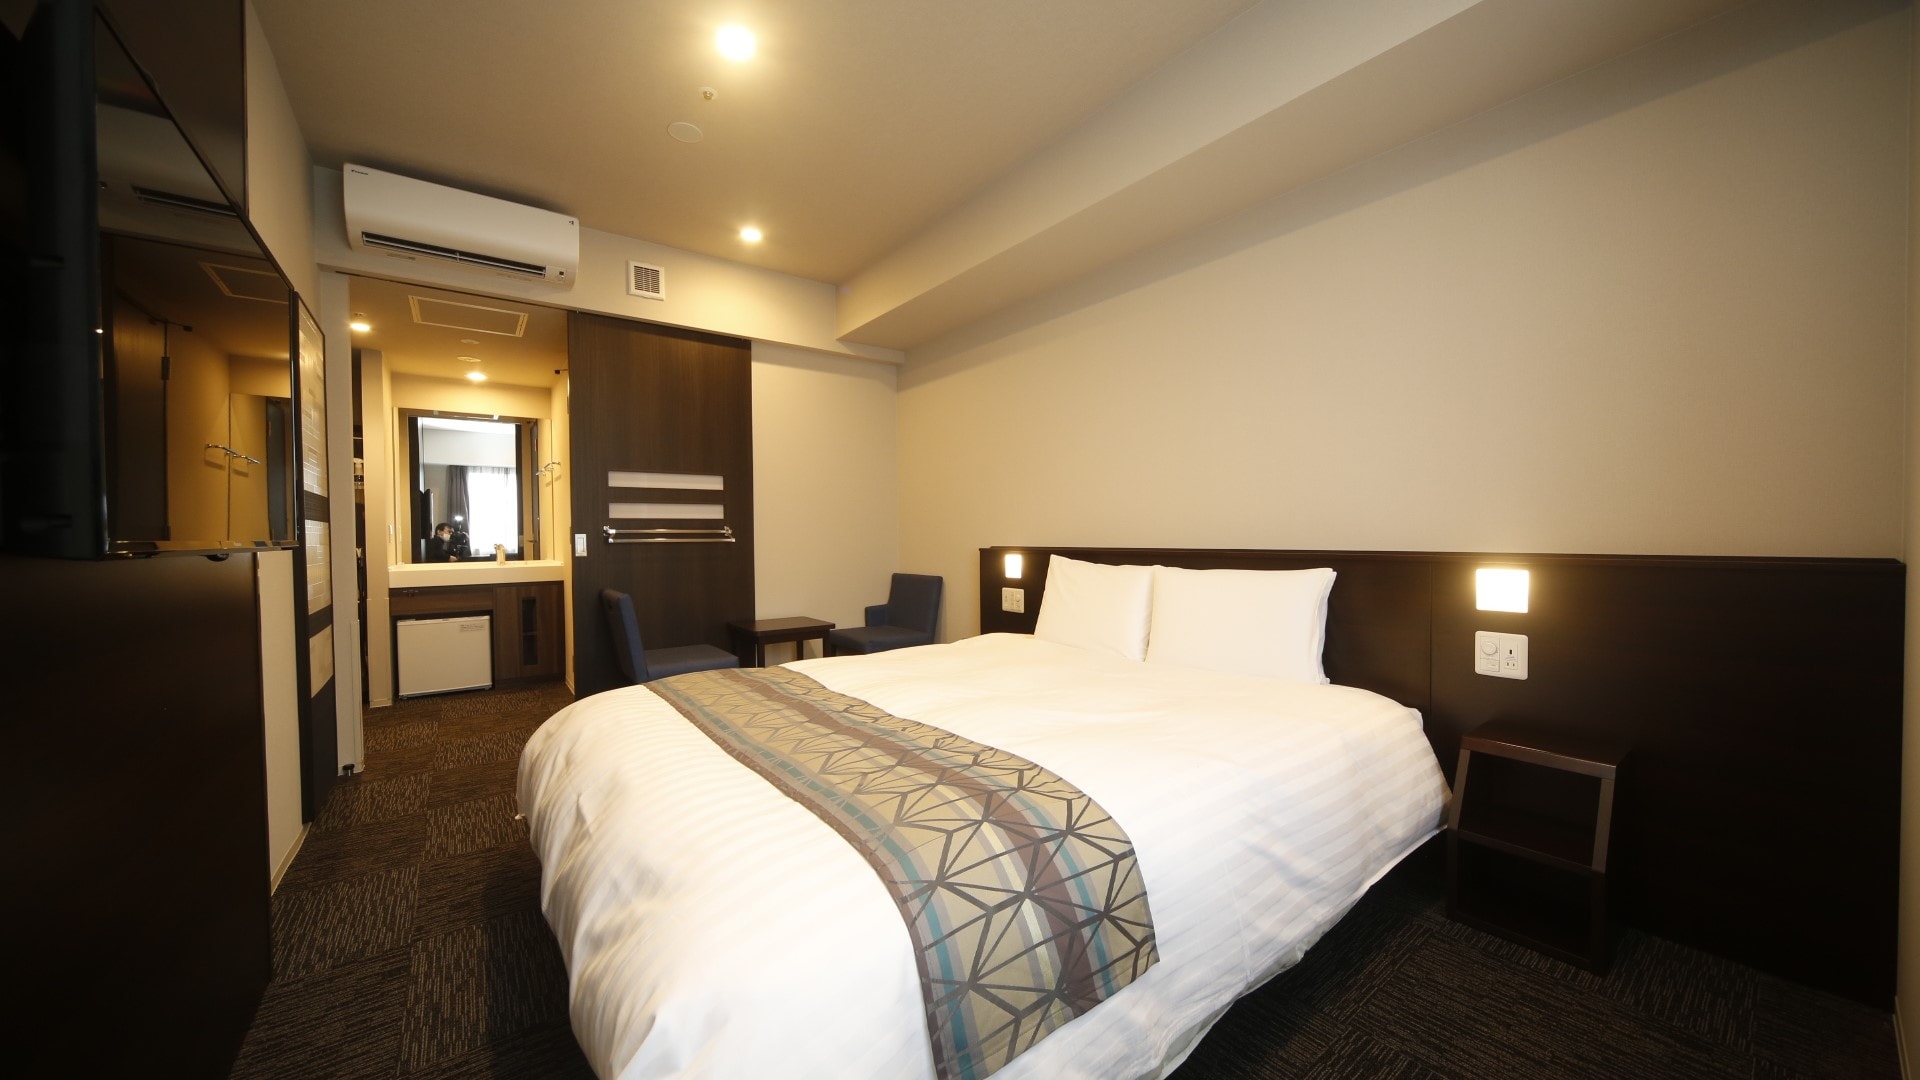 Deluxe Queen Room 22.2 square meters Bed size 160×195 cm Airweave